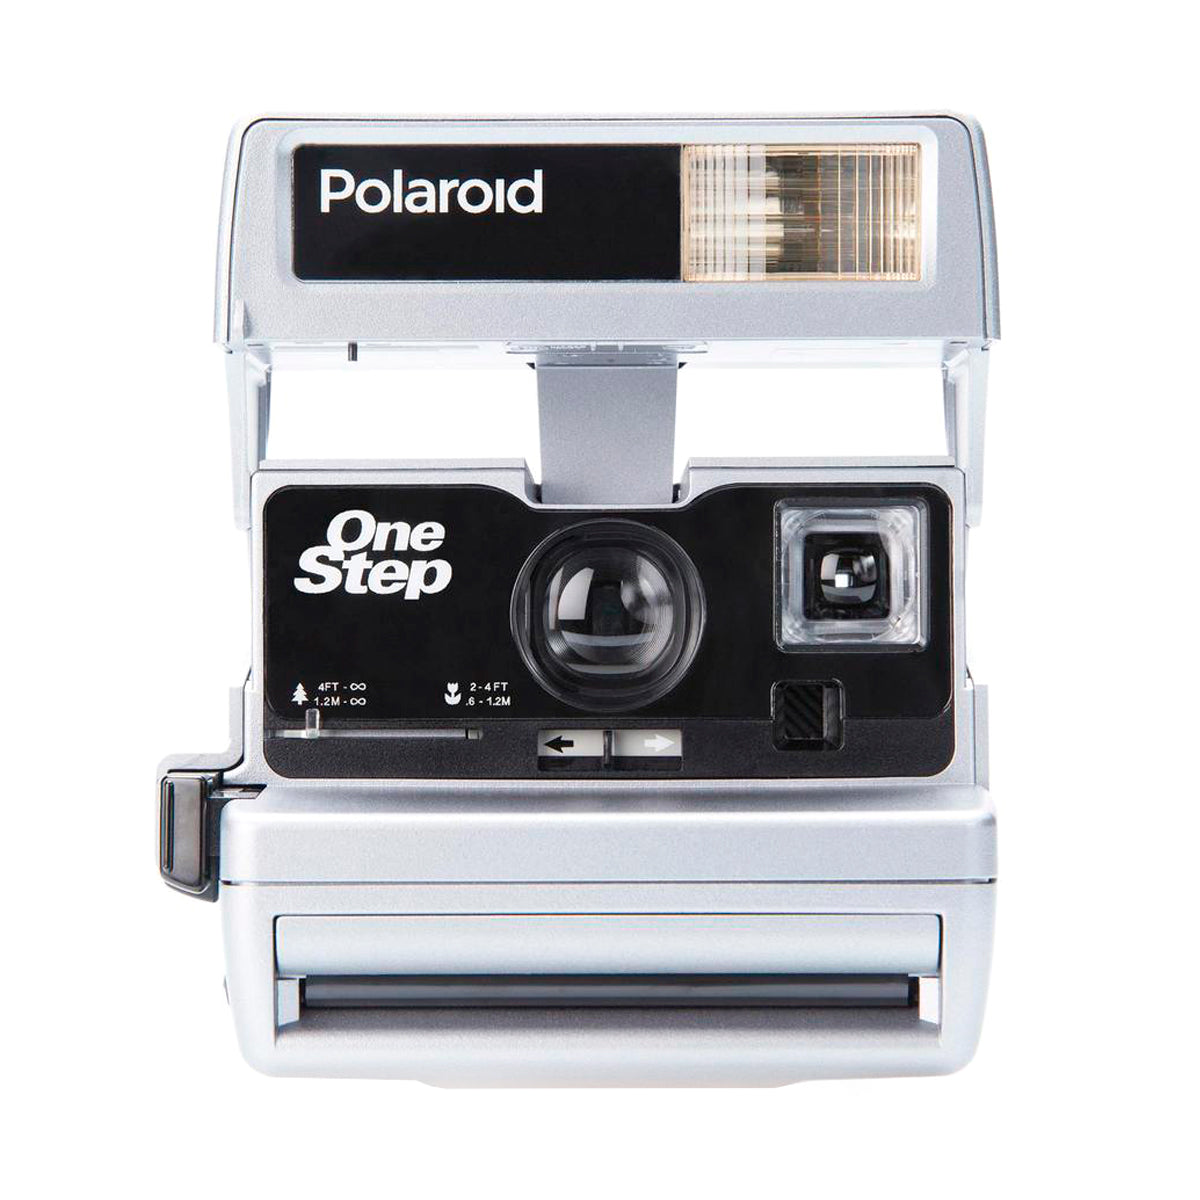 Polaroid One Step ton argent remis à neuf